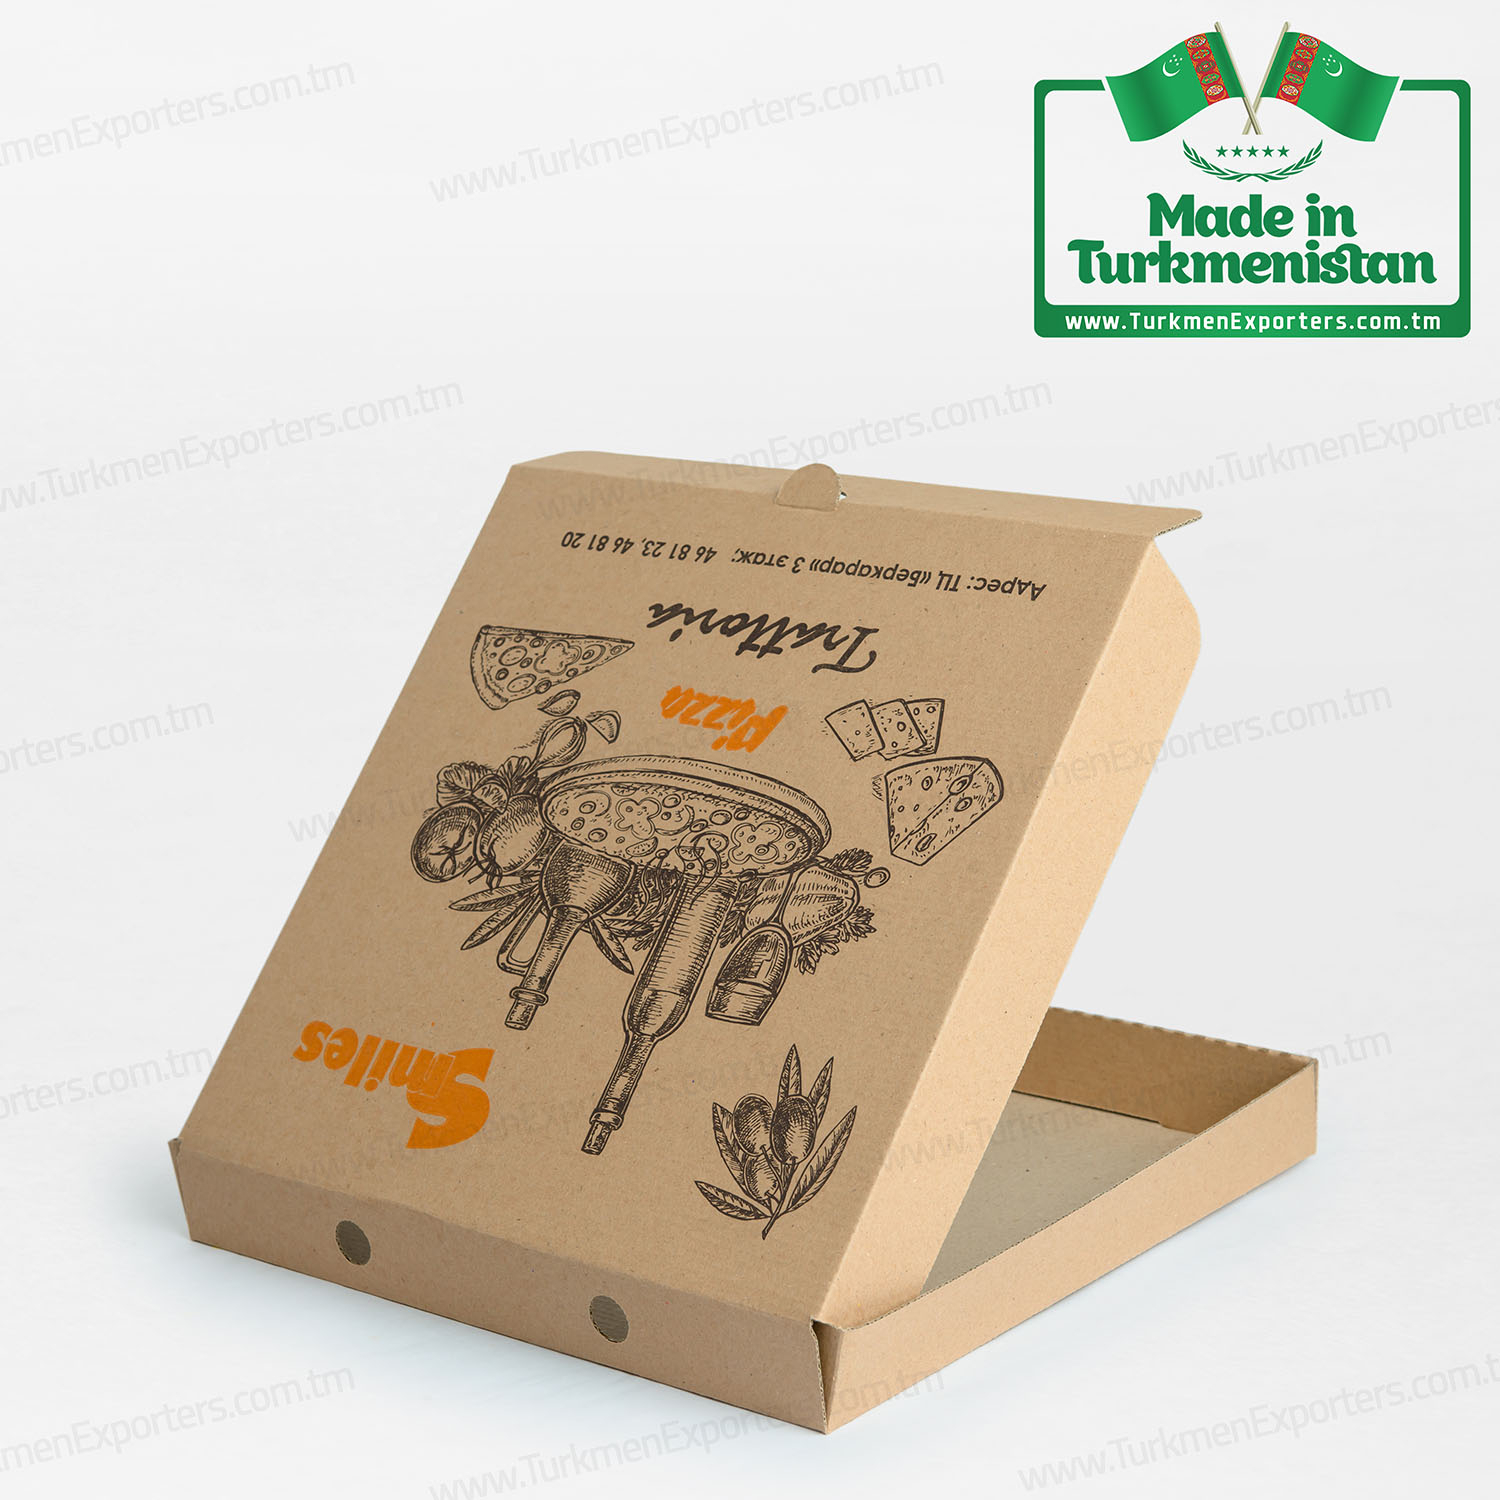 Turkmenistan cardboard box wholesale for export | Baka individual enterprise